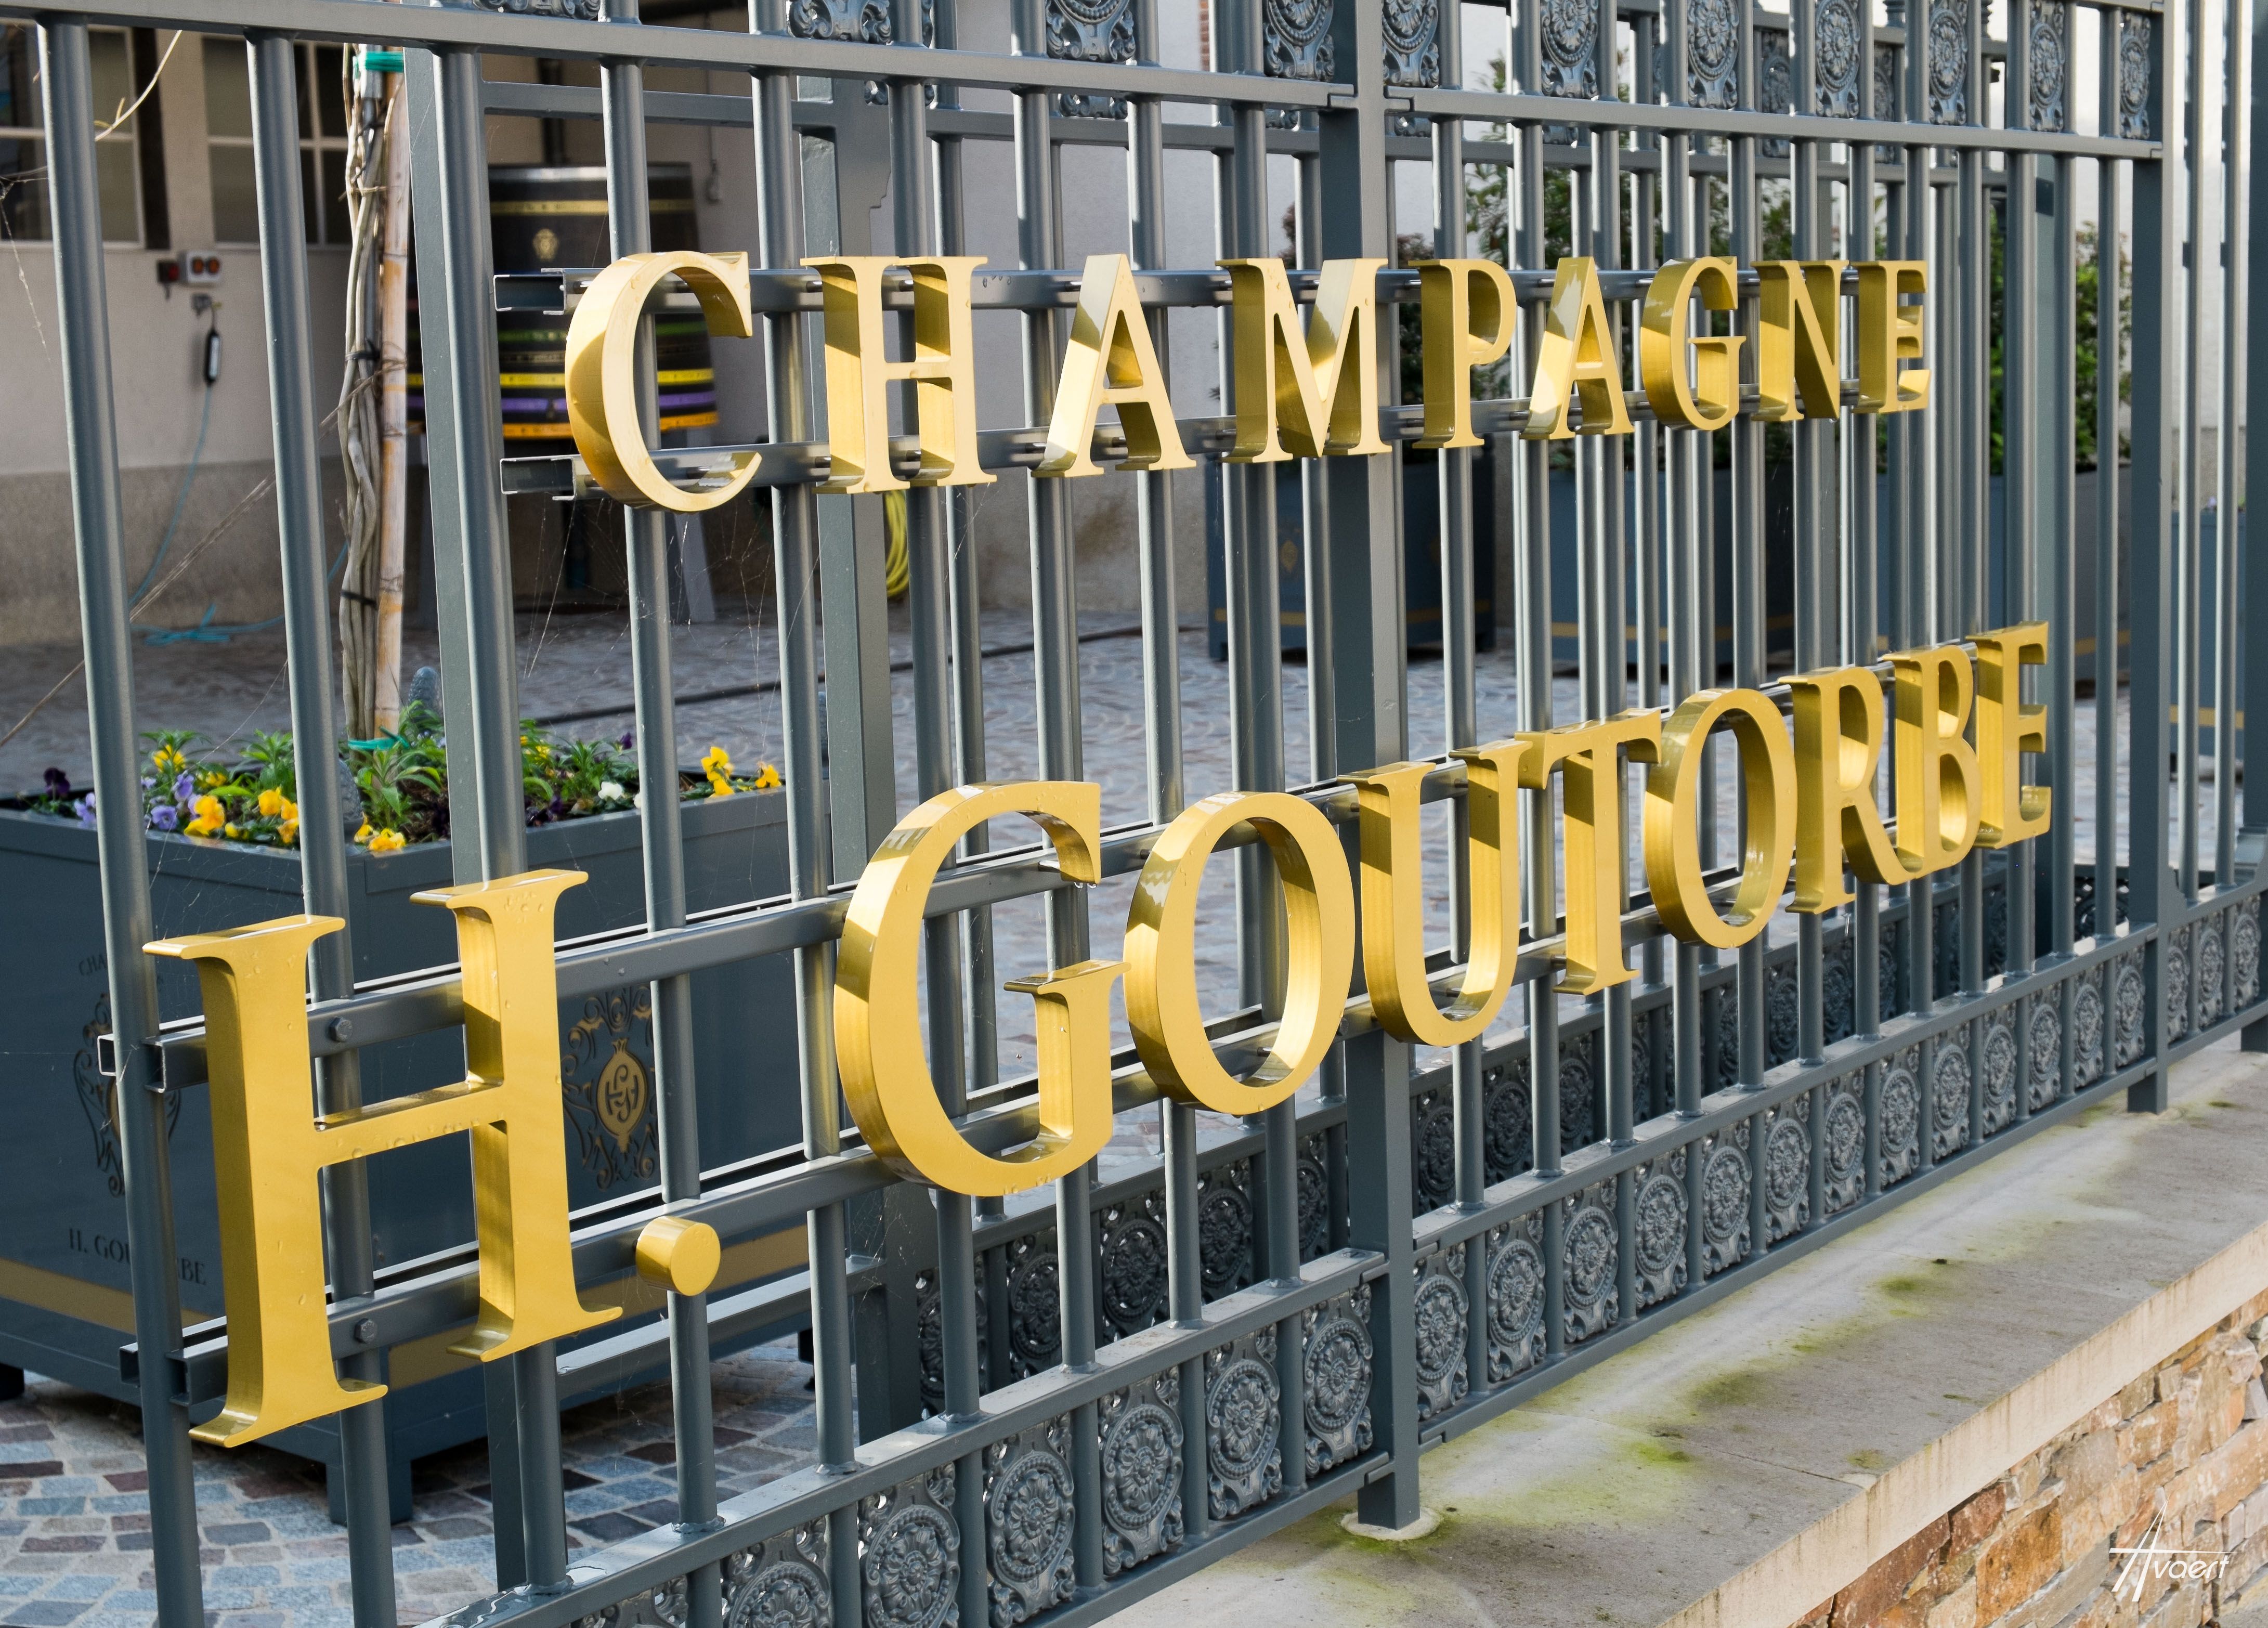 Champagne H.Goutorbe, Notre Maison